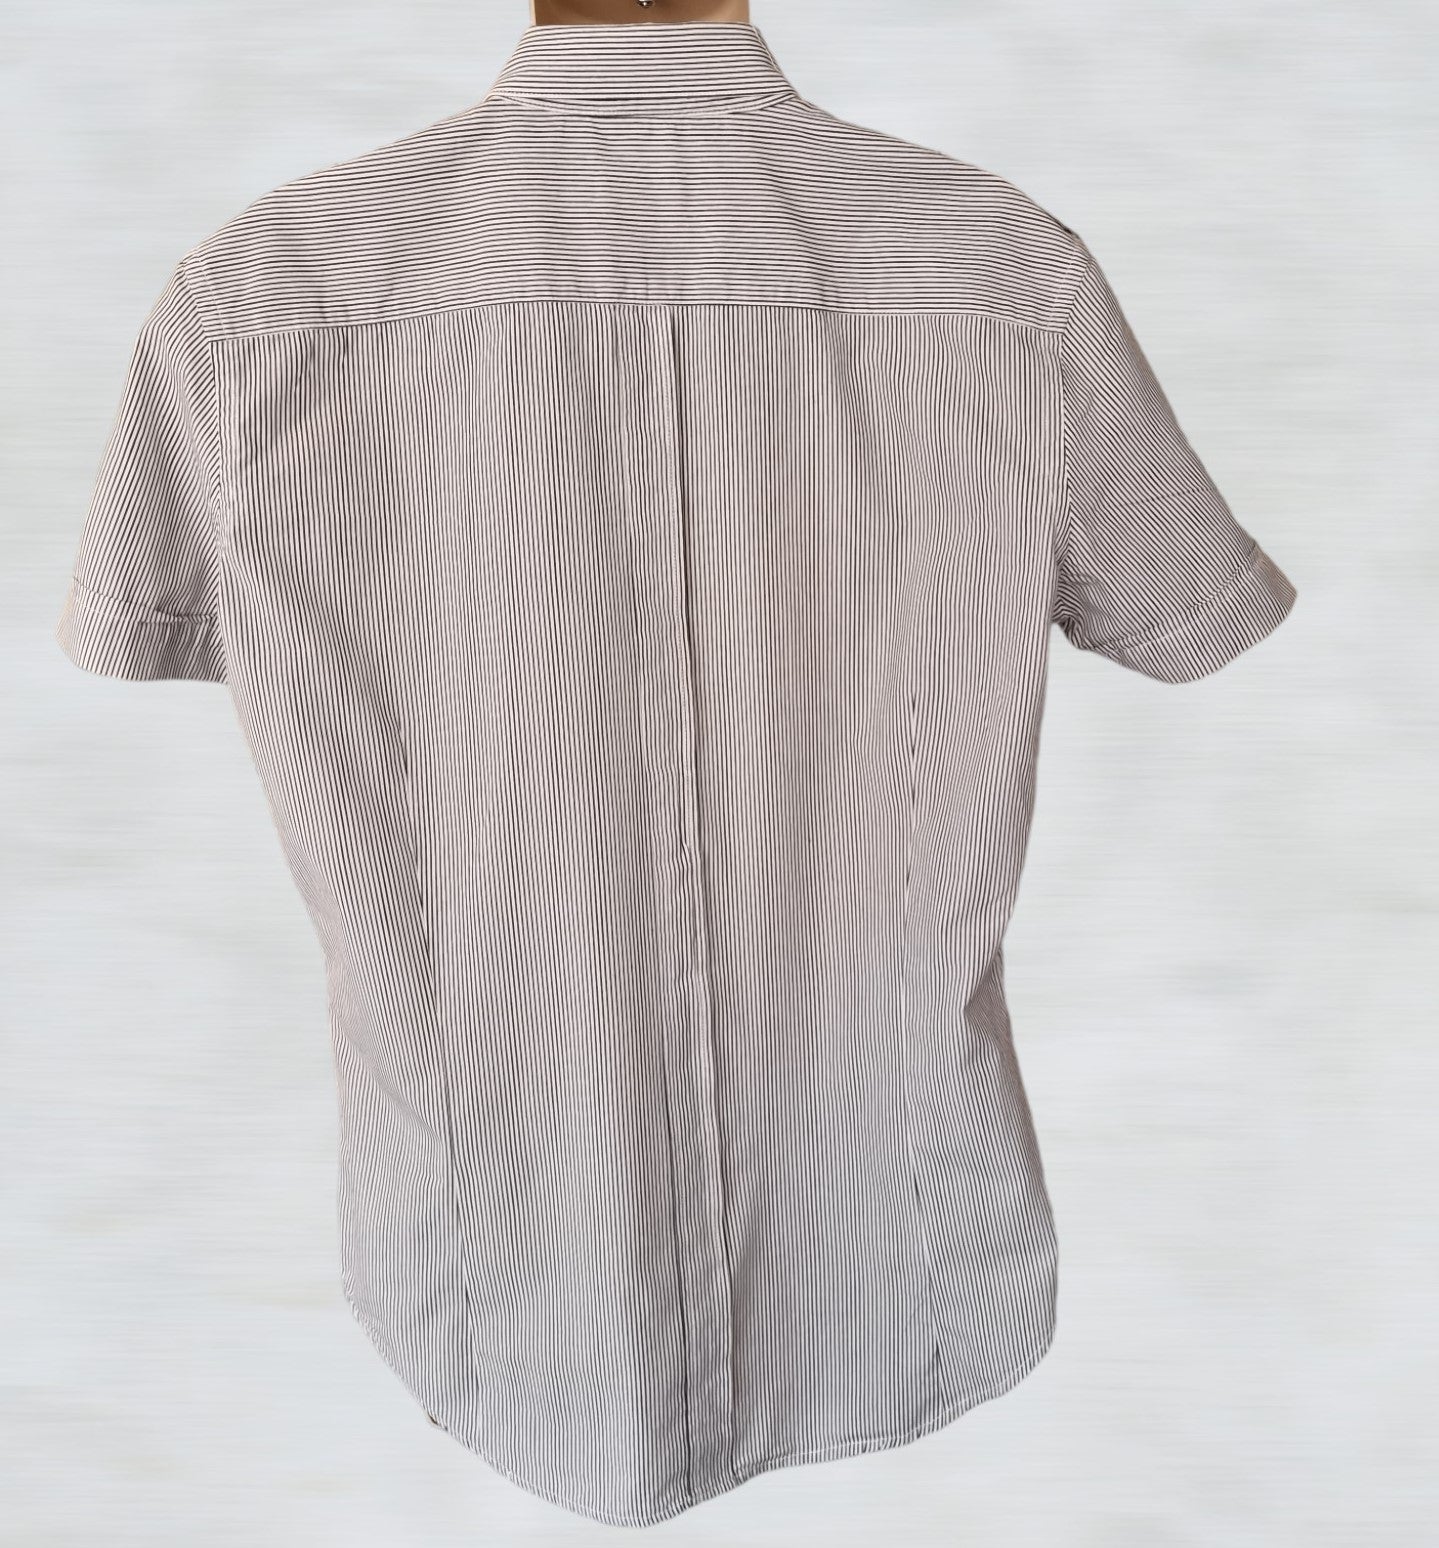 Diesel Men’s Black & White Striped Short Sleeve Cotton Shirt UK XXL Timeless Fashions